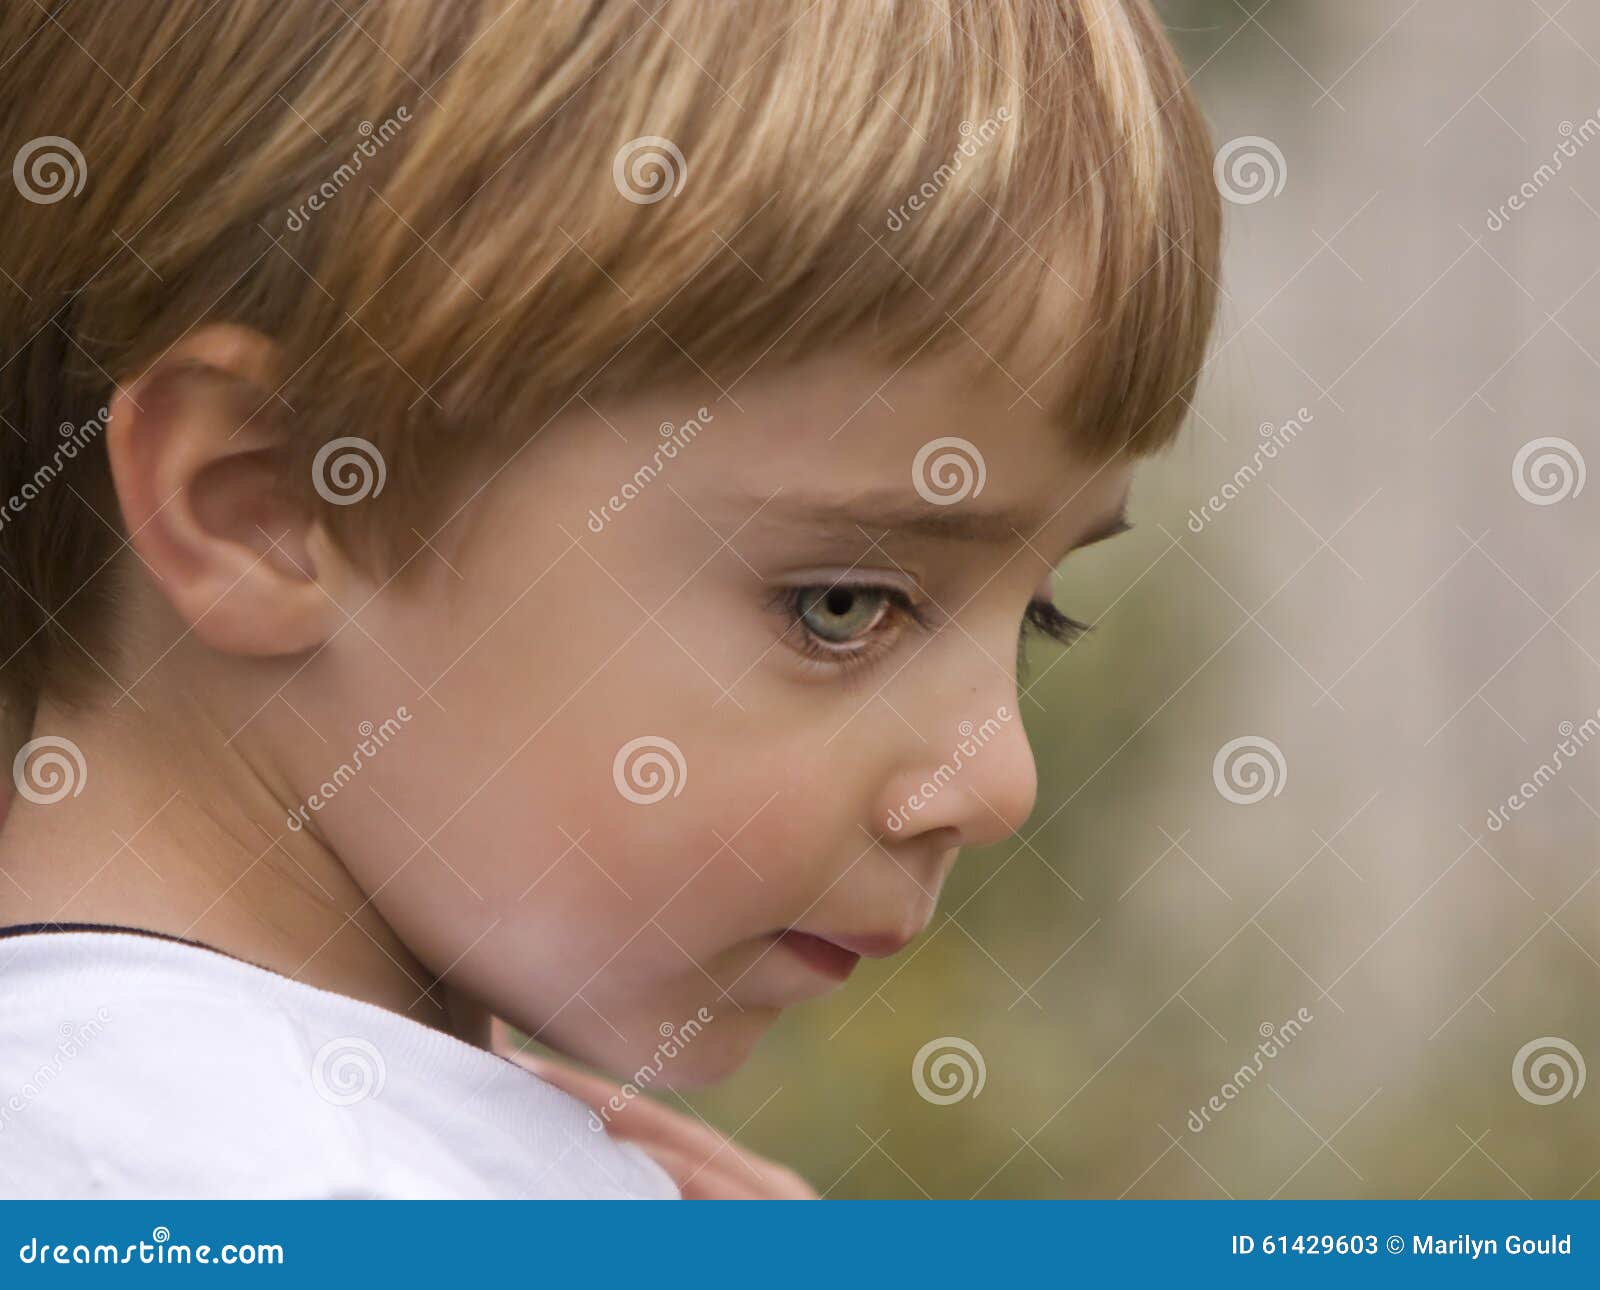 Shy Child with Blue Green Eyes Stock Image - Image of lashes, downward:  61429603